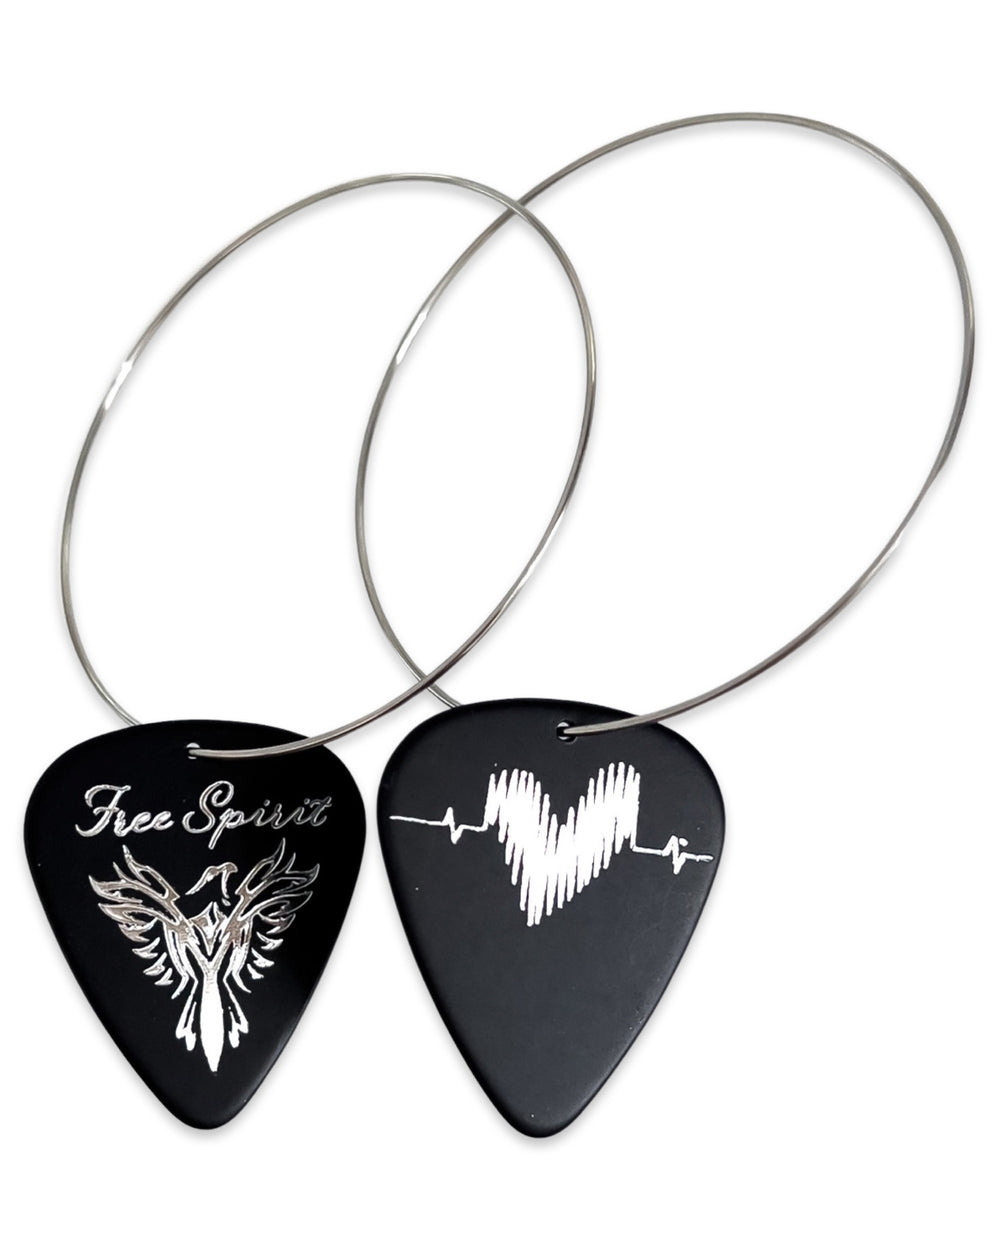 WS Free Spirit Black Silver Reversible Single Guitar Pick Earrings